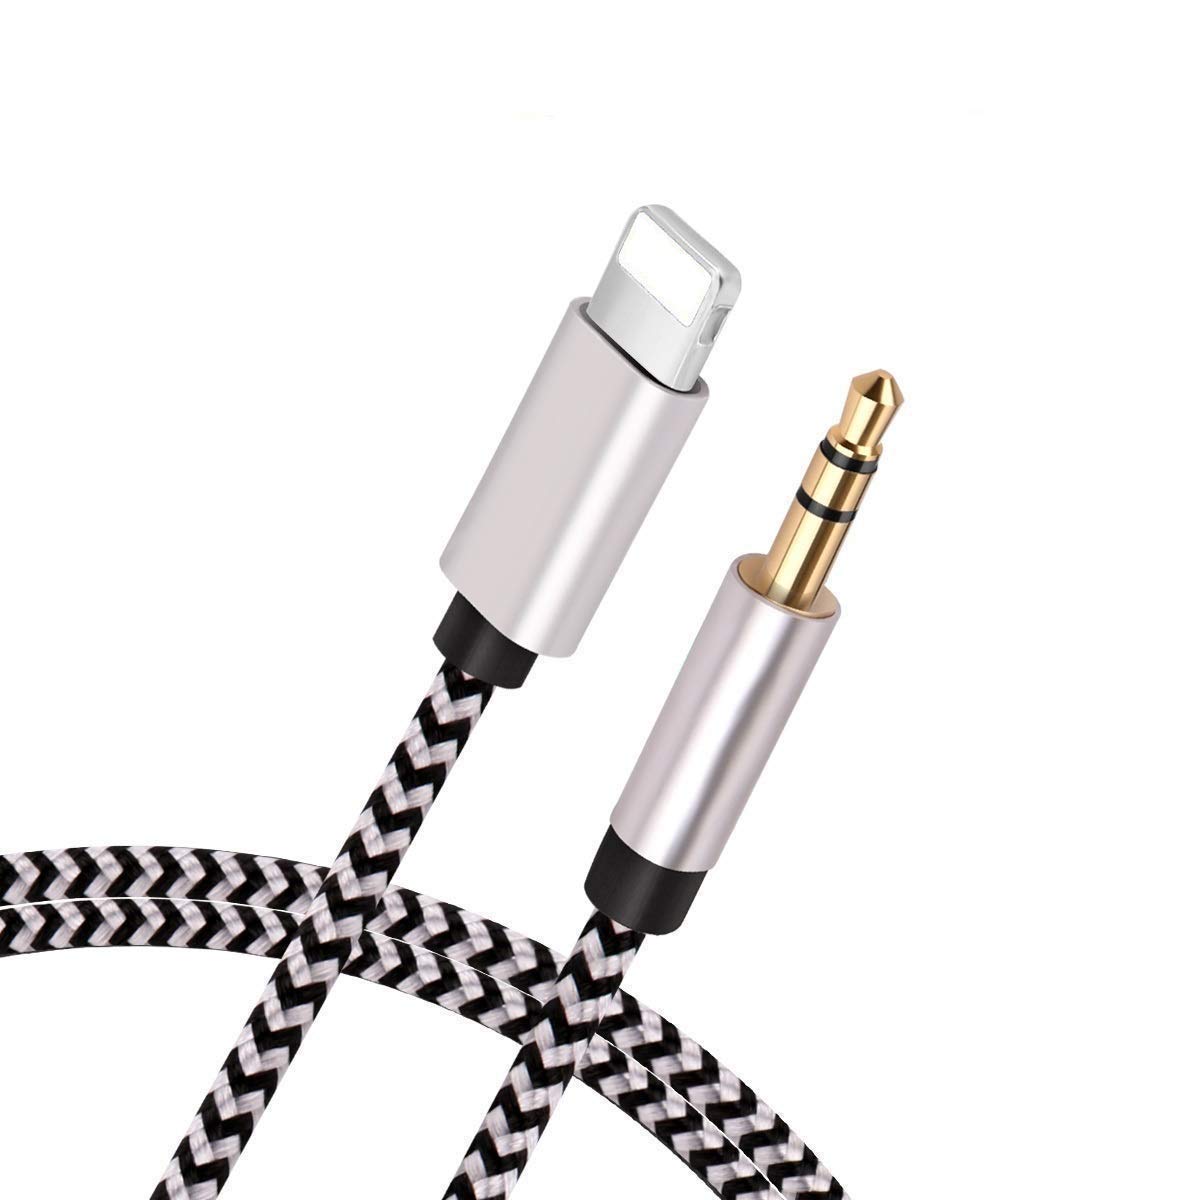 Cable auxiliar para iPhone